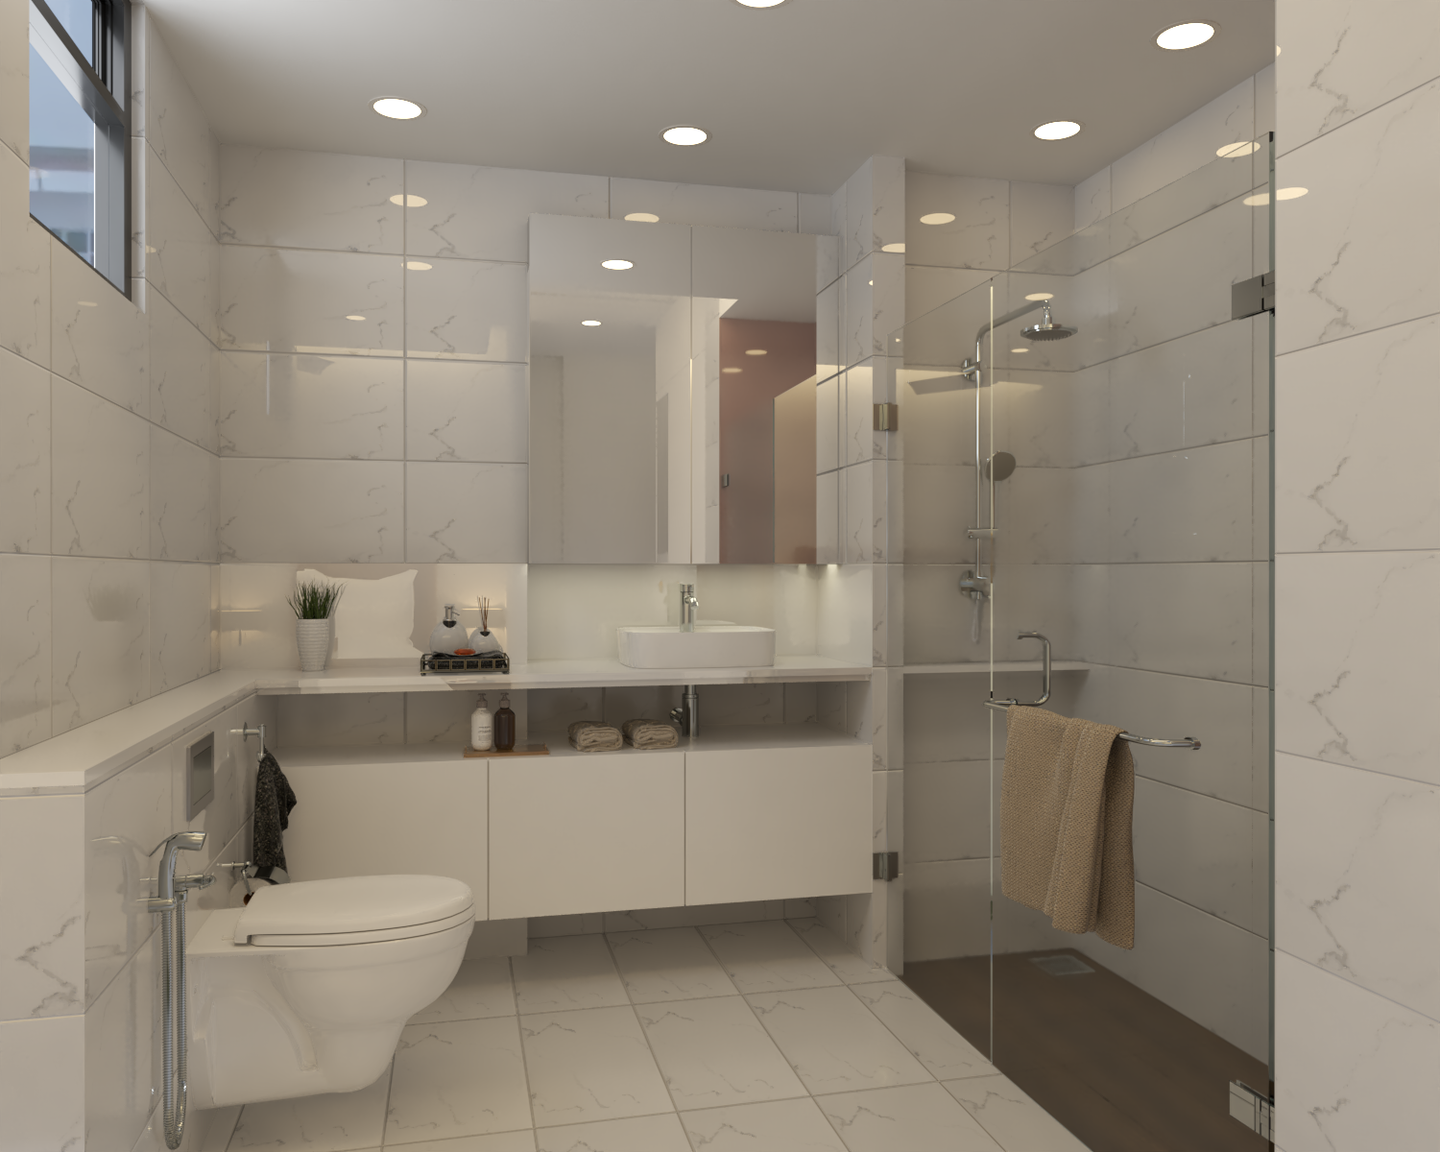 Cream Tiled Walls False Ceiling Spacious Bathroom Design - Livspace